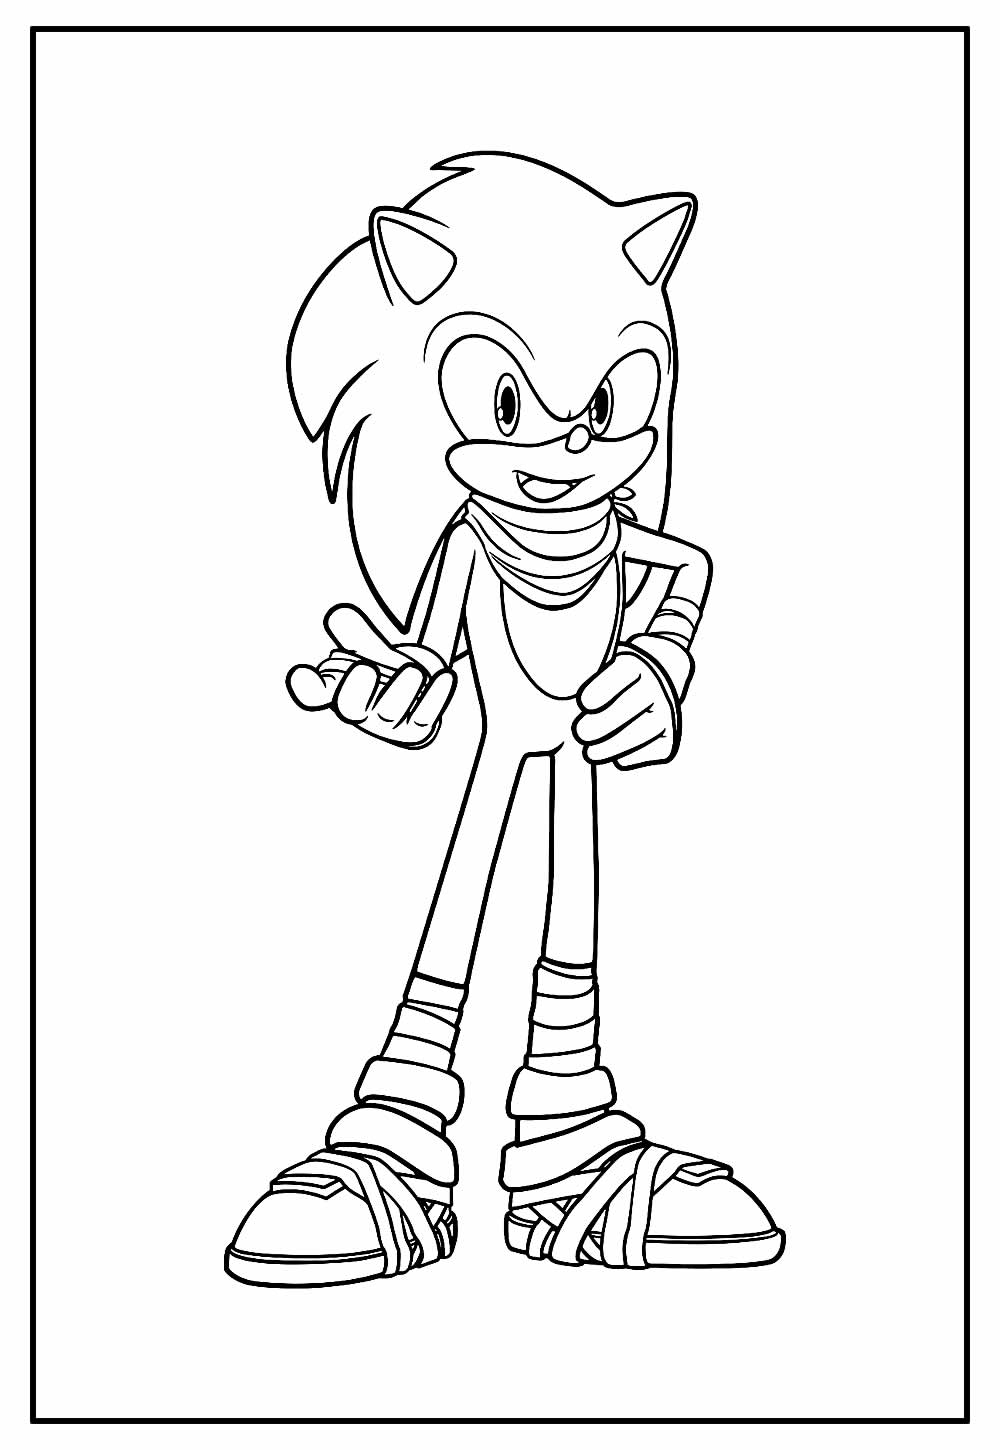 Desenho - Sonic (colorido)